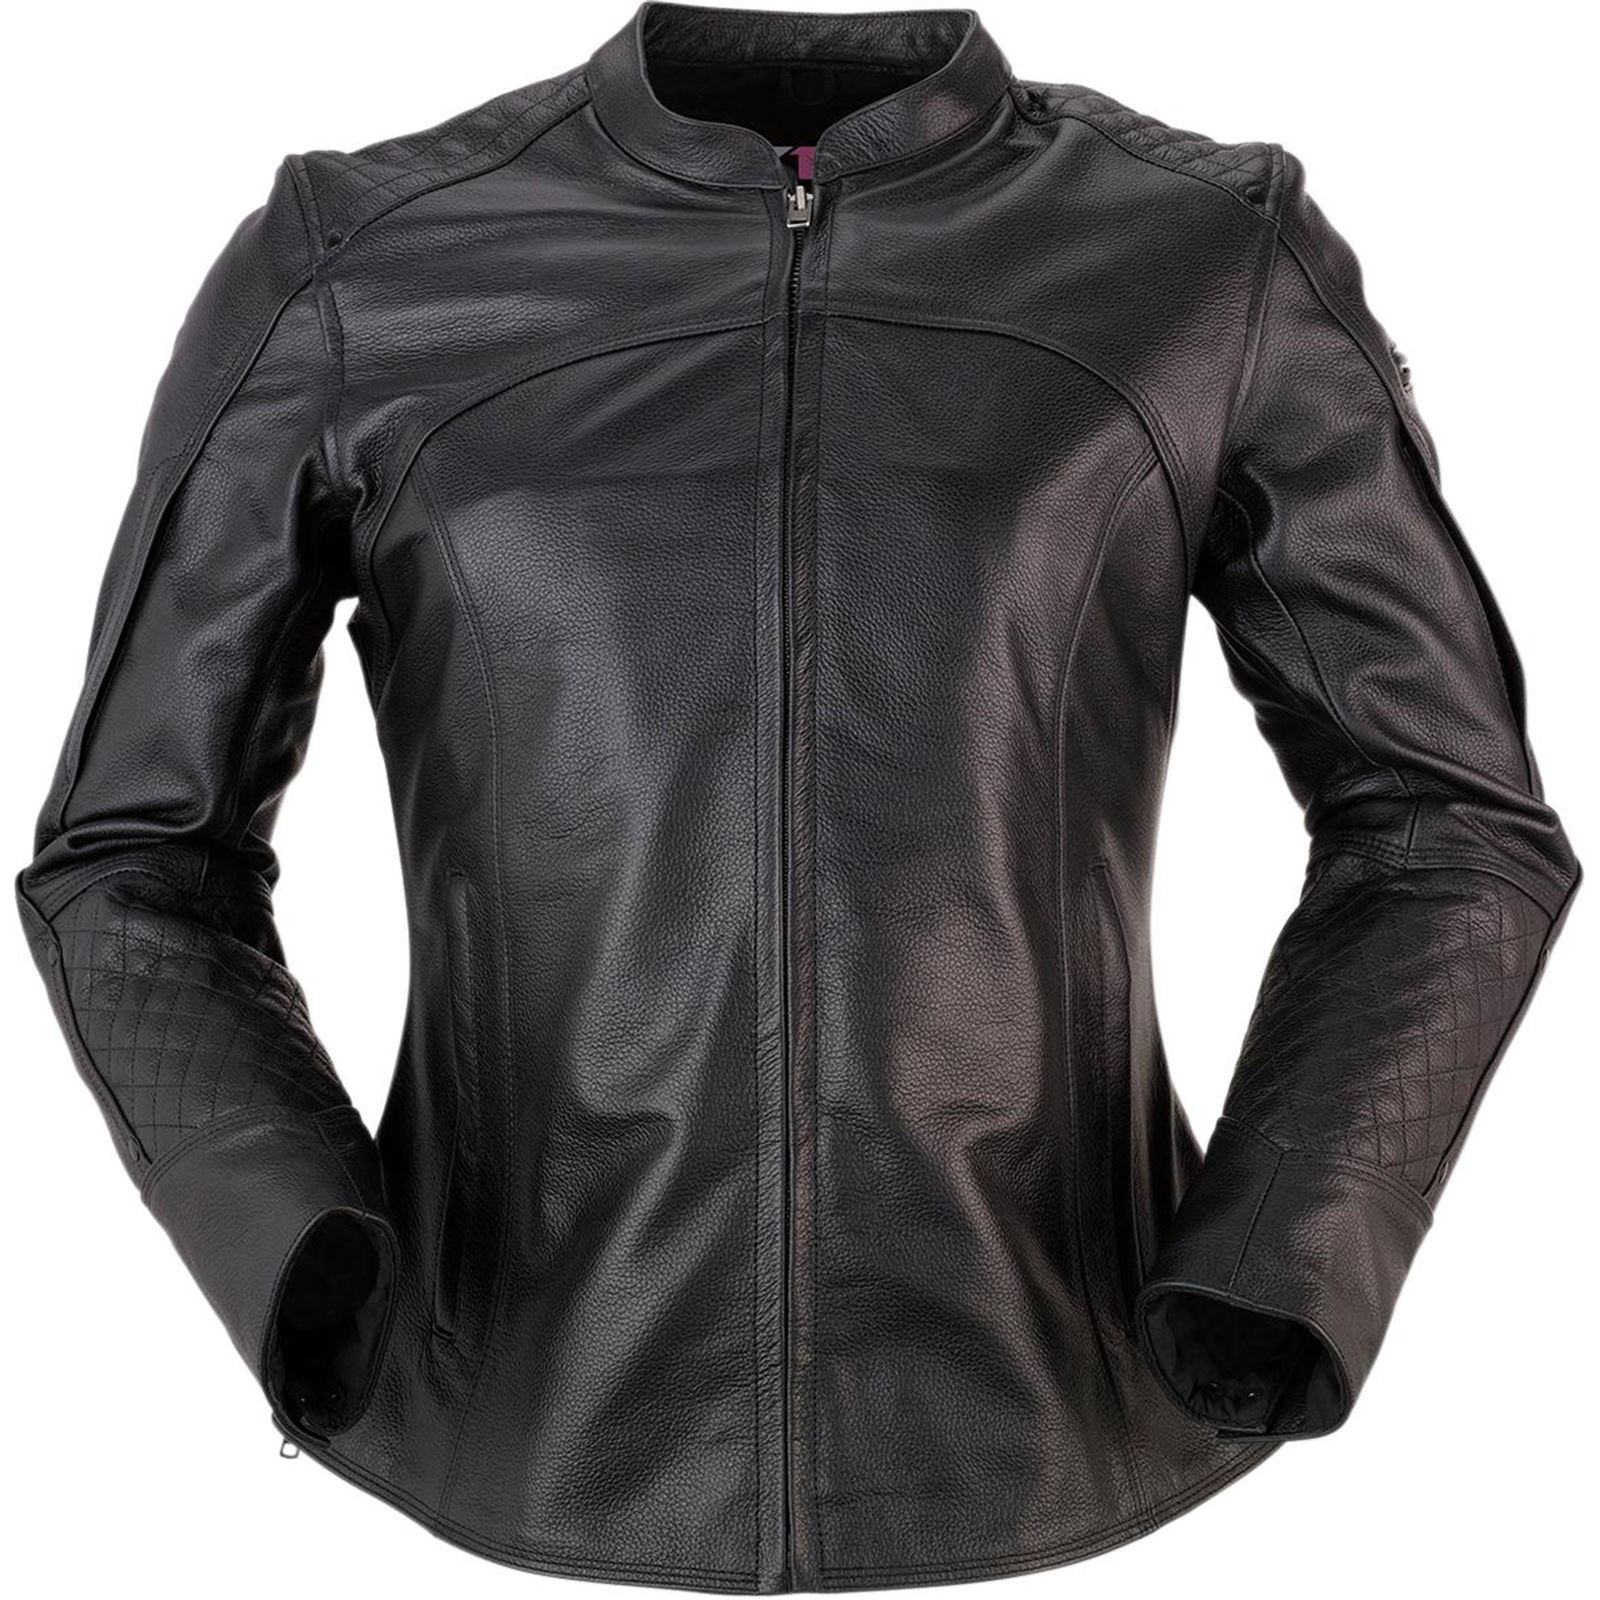 Z1R Women's 35 Special Jacket - Black - Large